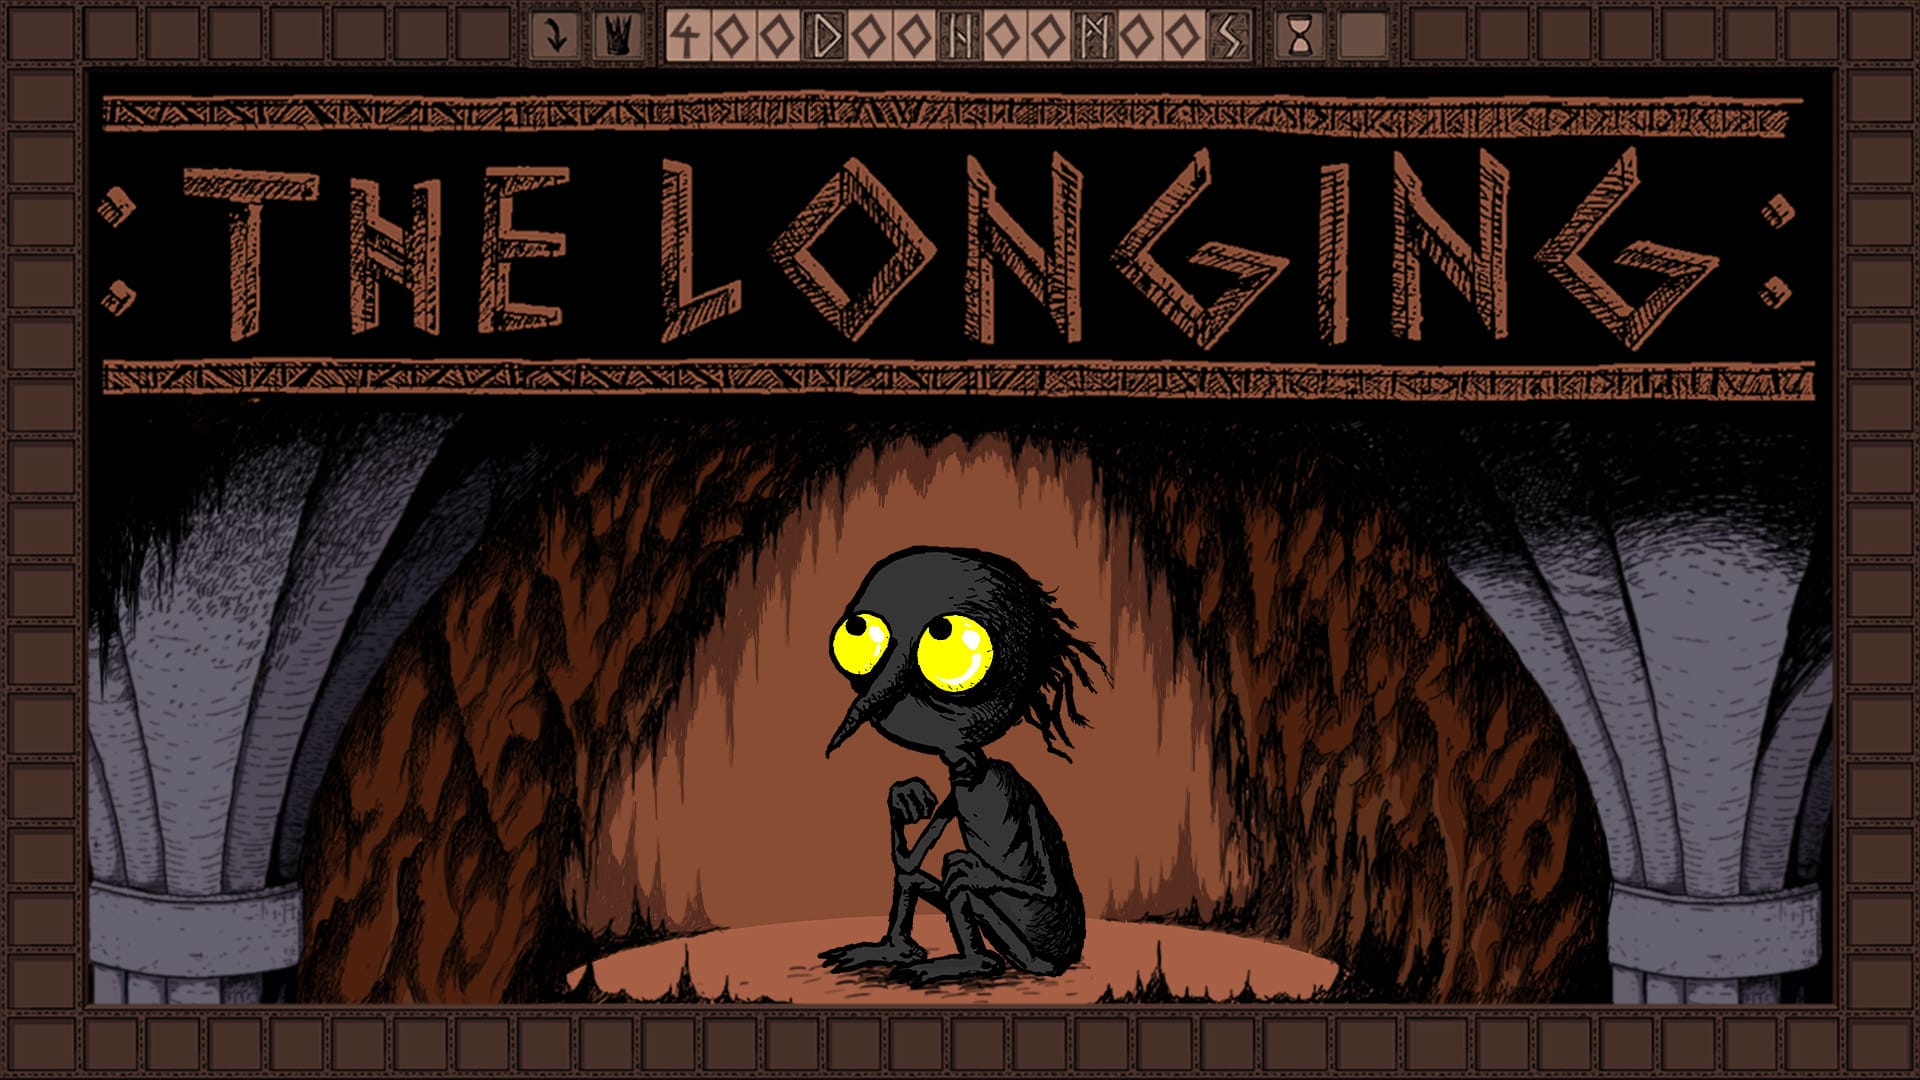 The Longing (Nintendo Switch Digital Download) $11.24